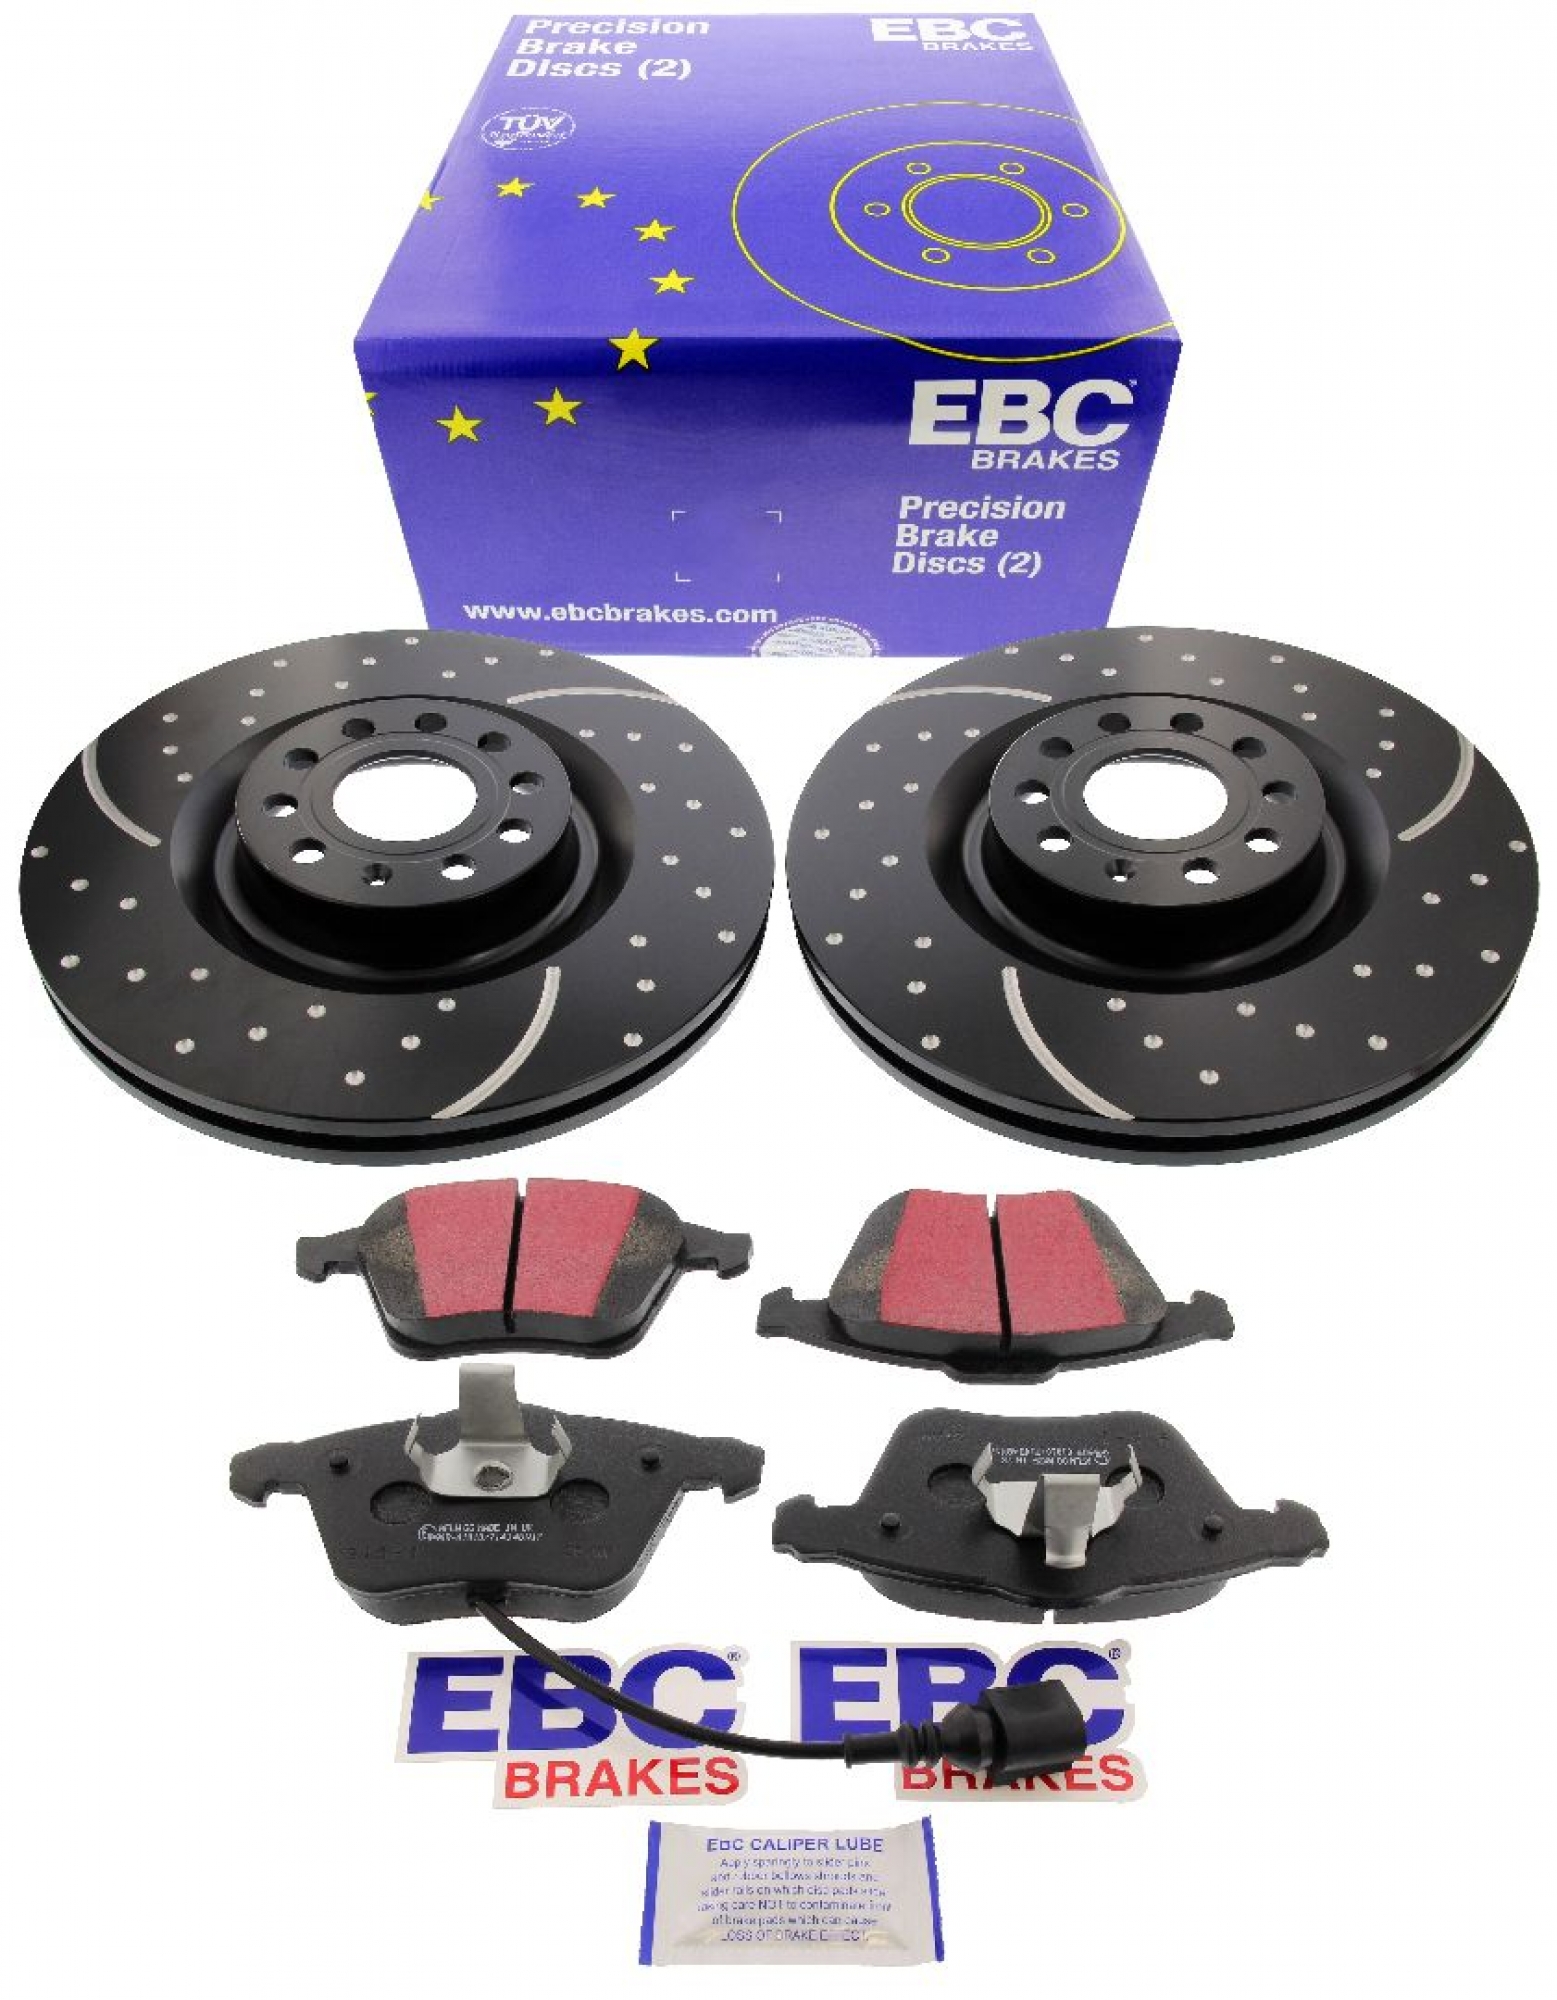 EBC-Bremsensatz, Turbo Groove Disc Black + Bremsbeläge, Blackstuff, Achssatz, VA, Seat Leon, VW Golf, Scirocco